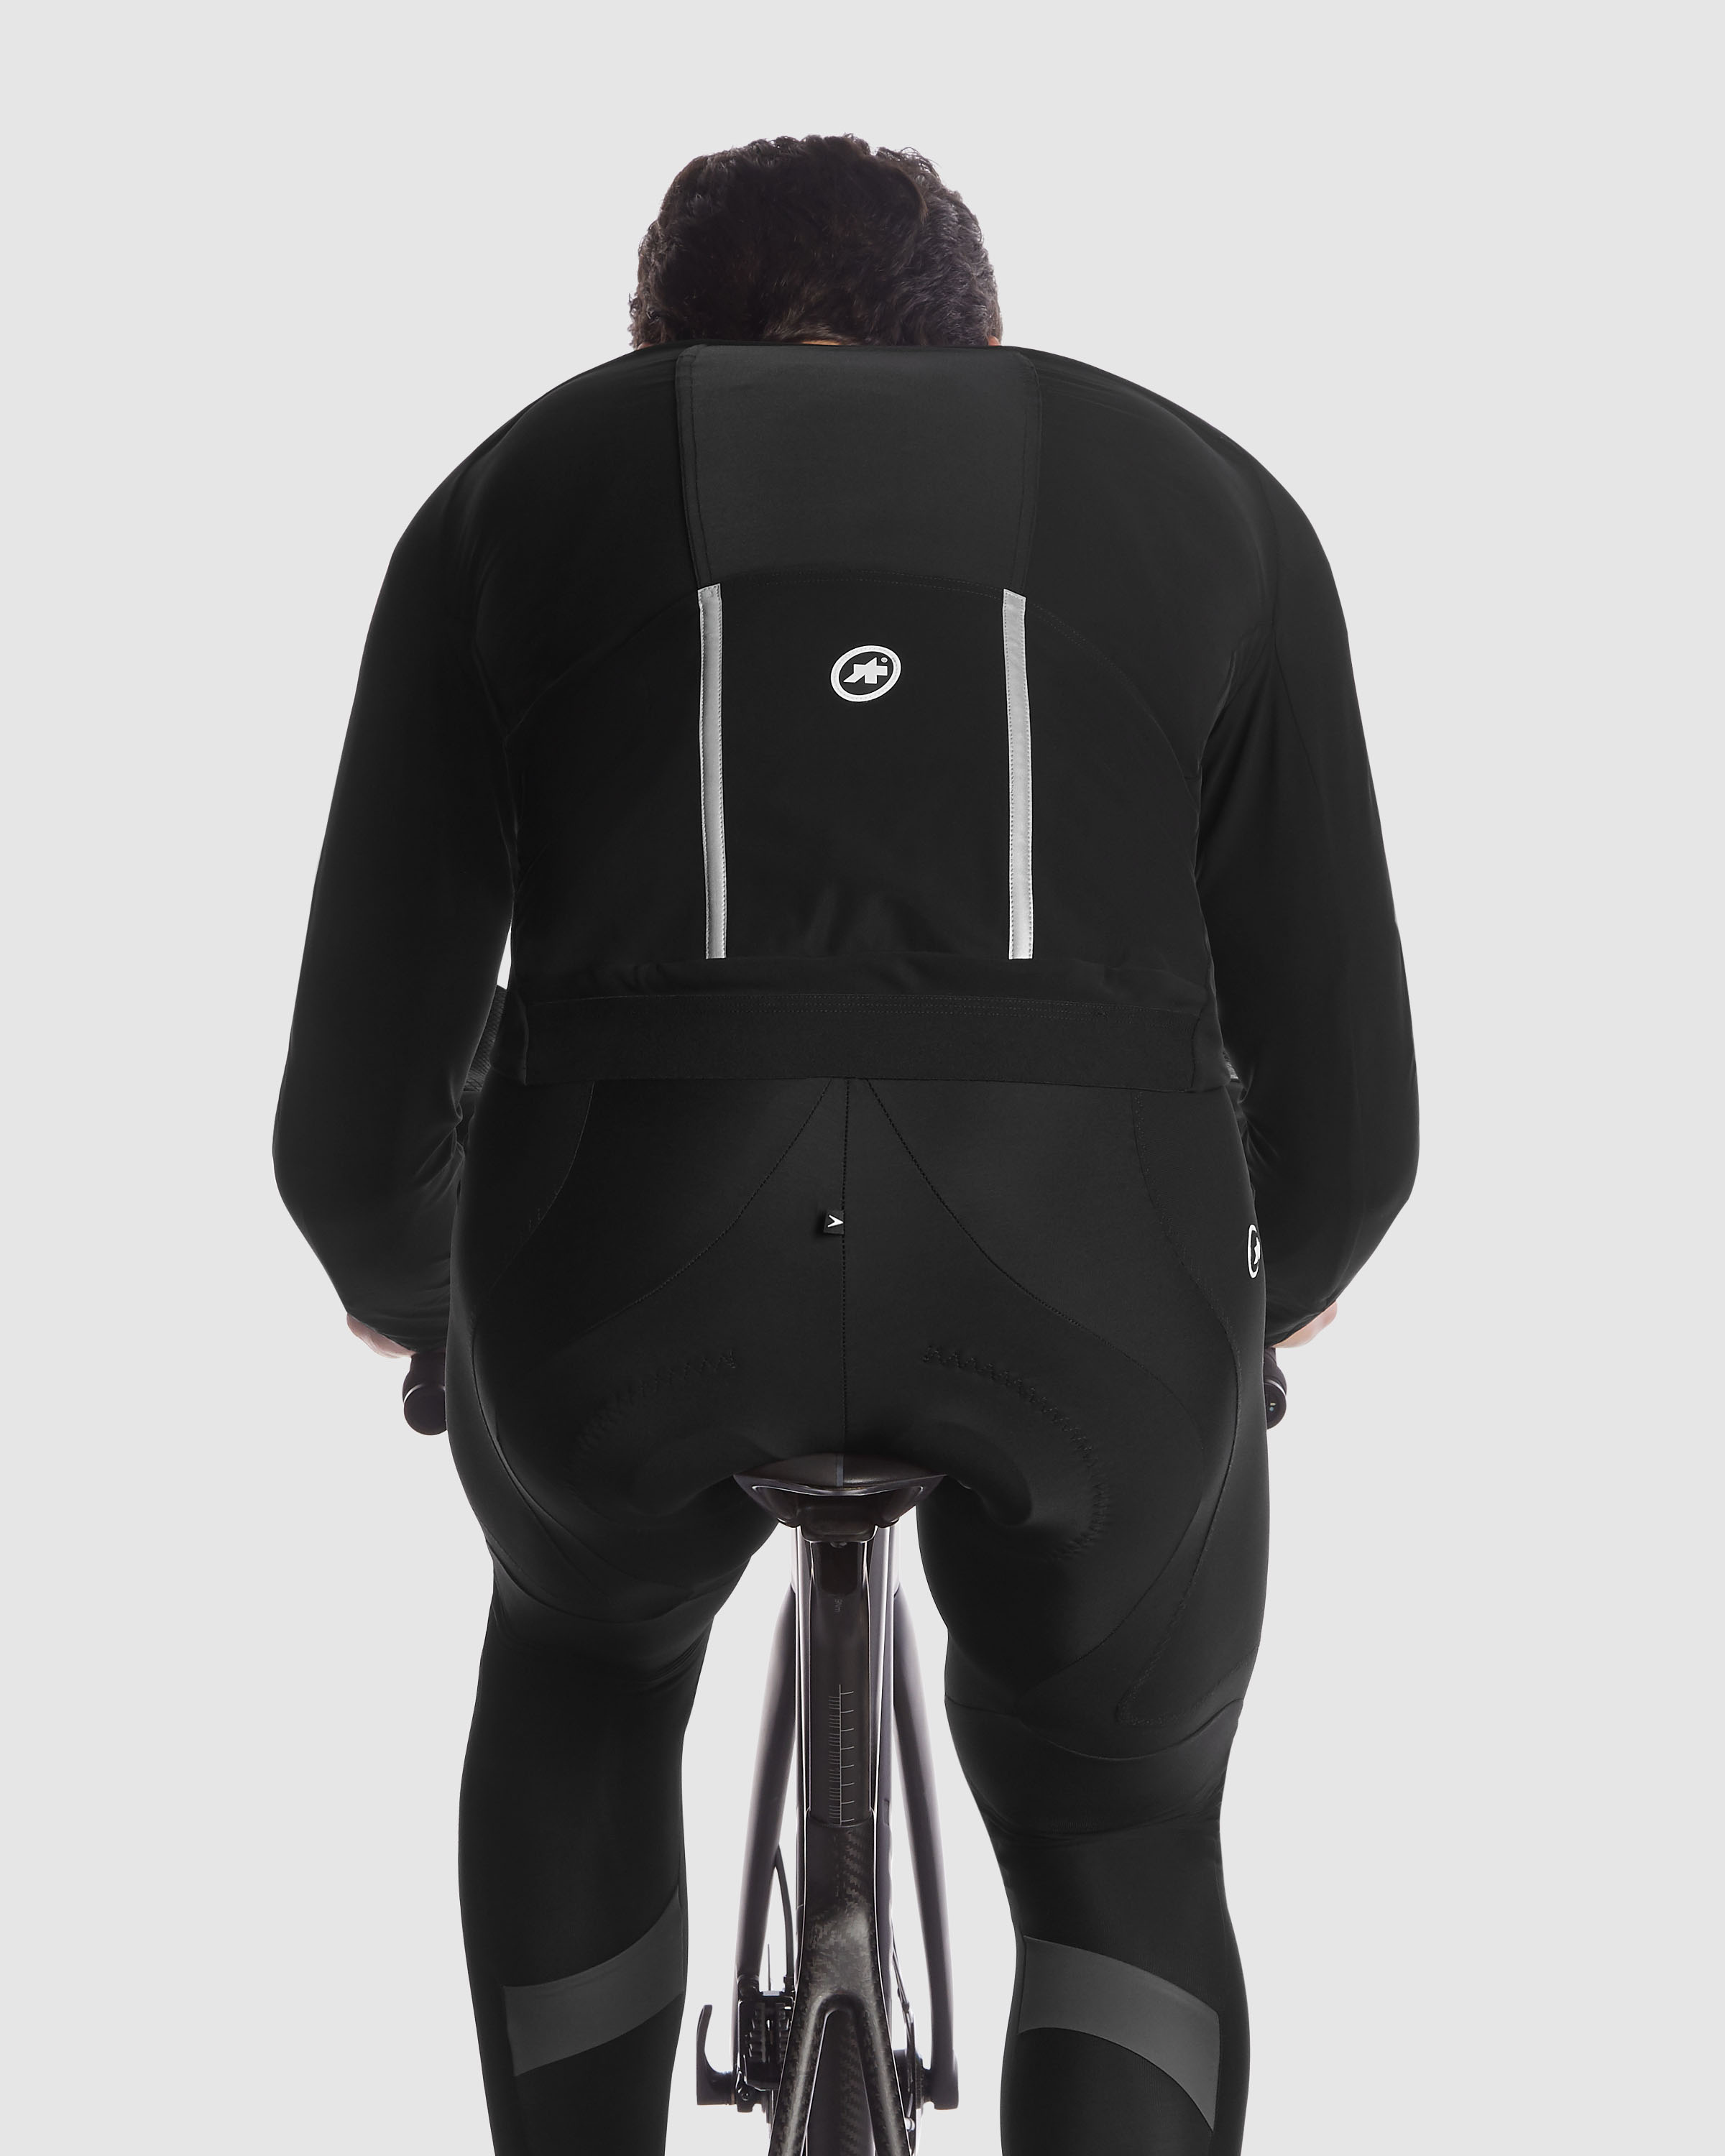 MILLE GT Ultraz Winter Jacket EVO, blackSeries » ASSOS Of Switzerland